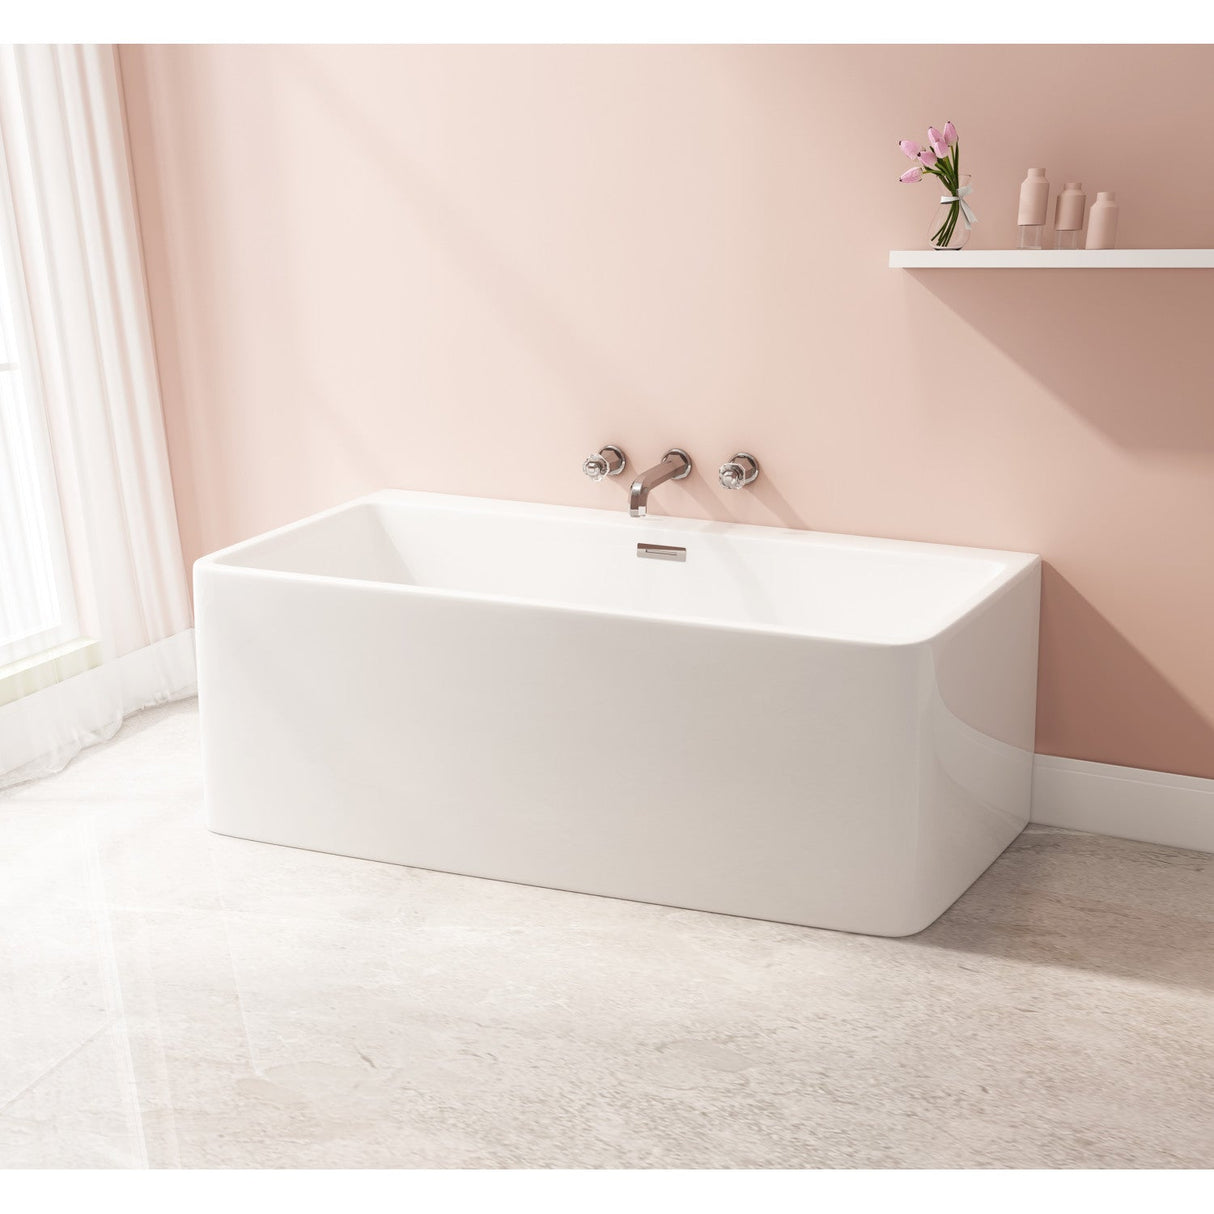 Aqua Eden VTSQ673023 67-Inch Acrylic Freestanding Tub with Drain, White